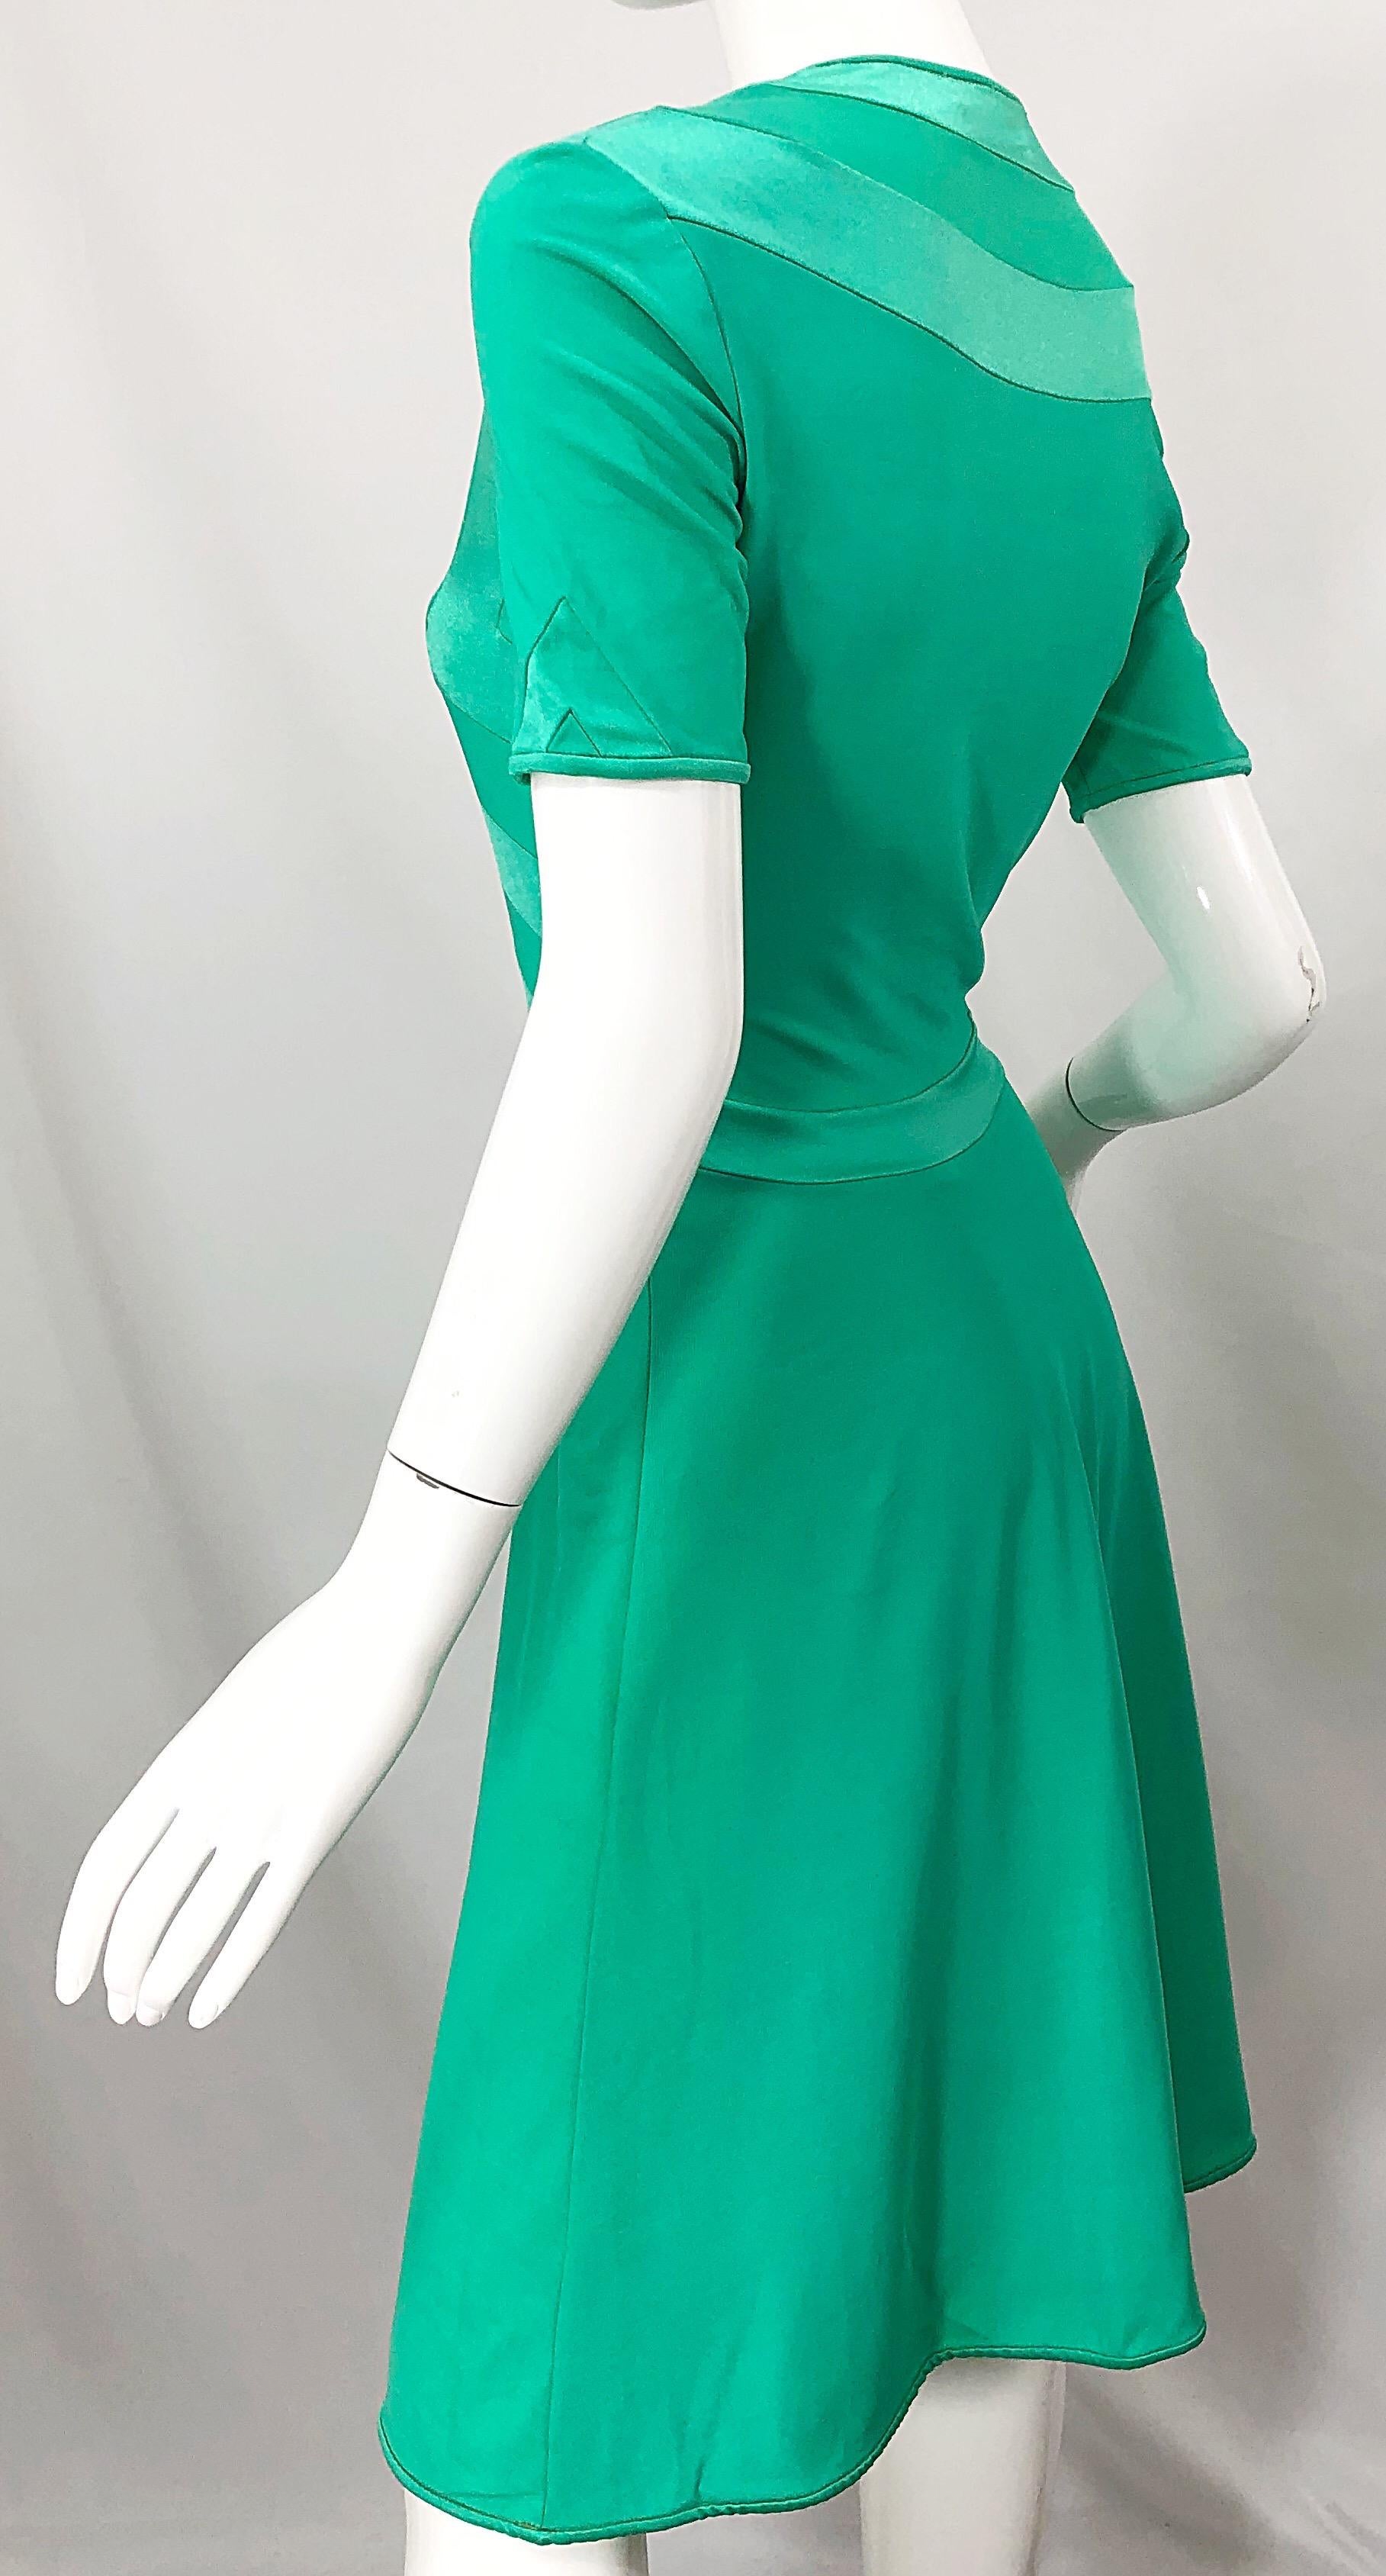 1970s Giorgio di Sant Angelo Kelly Green Slinky Bodysuit 70s Vintage Dress For Sale 2